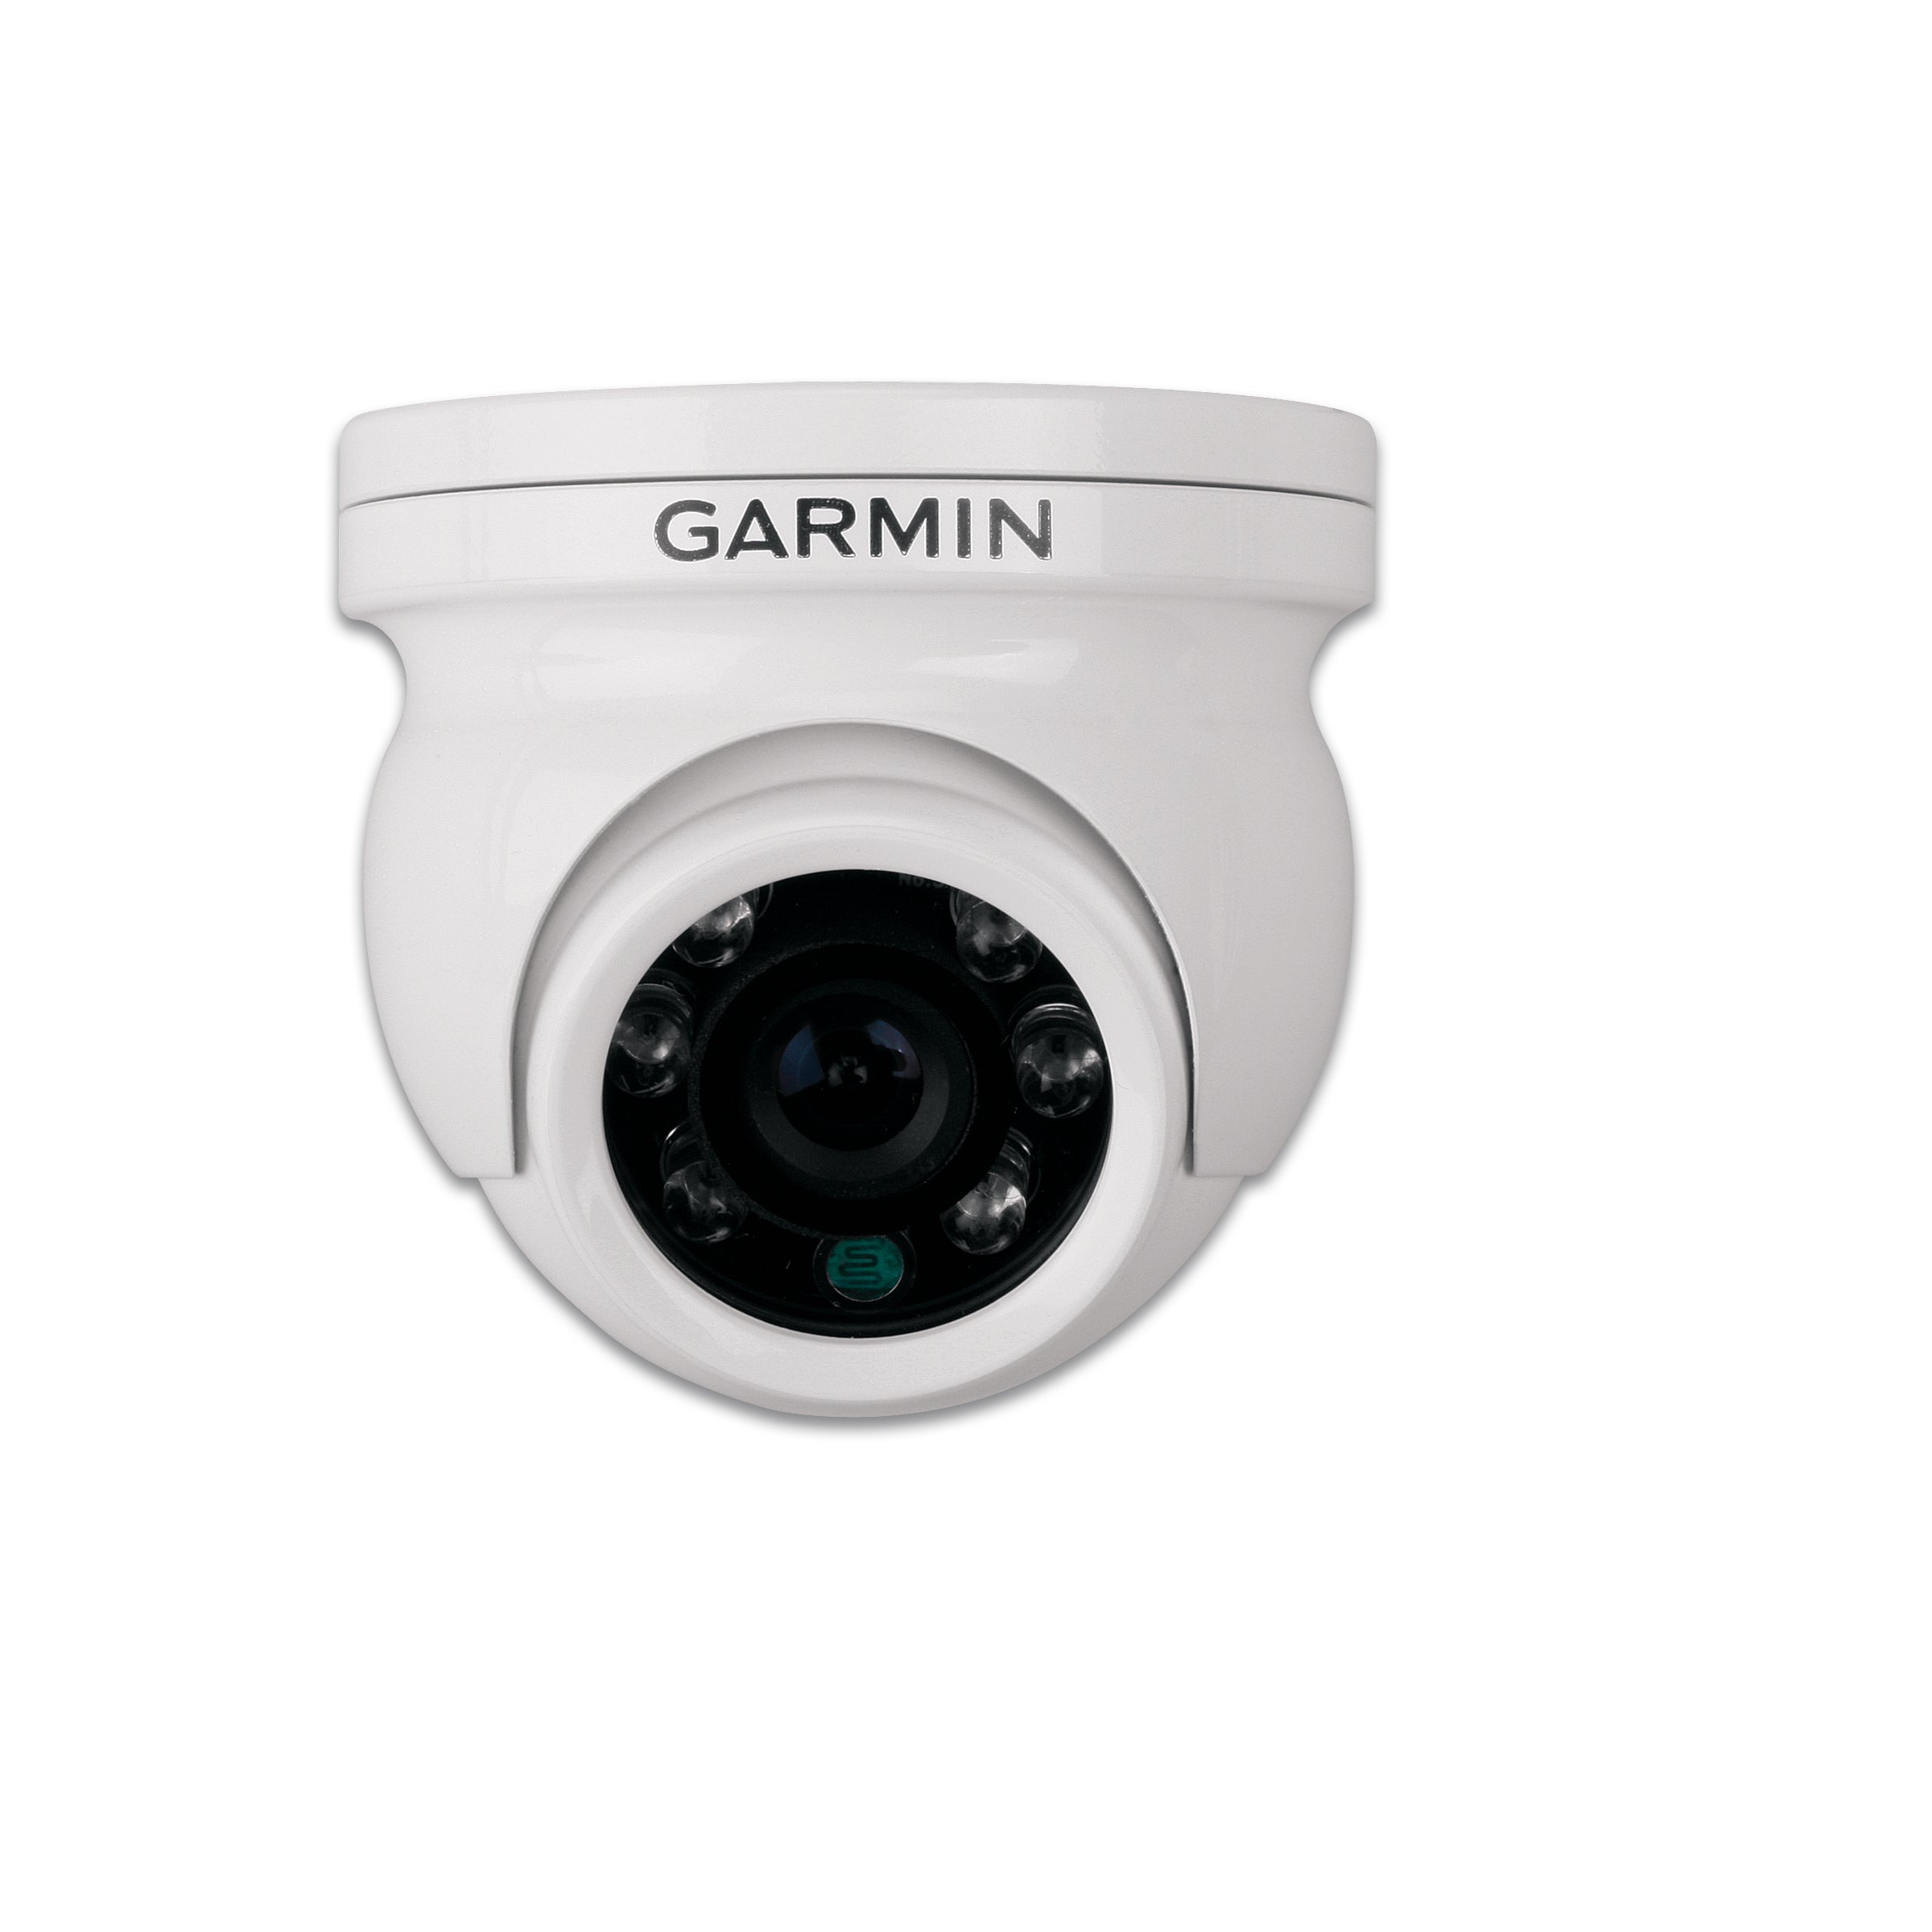 Garmin GC™ 10 marine camera, mirror image